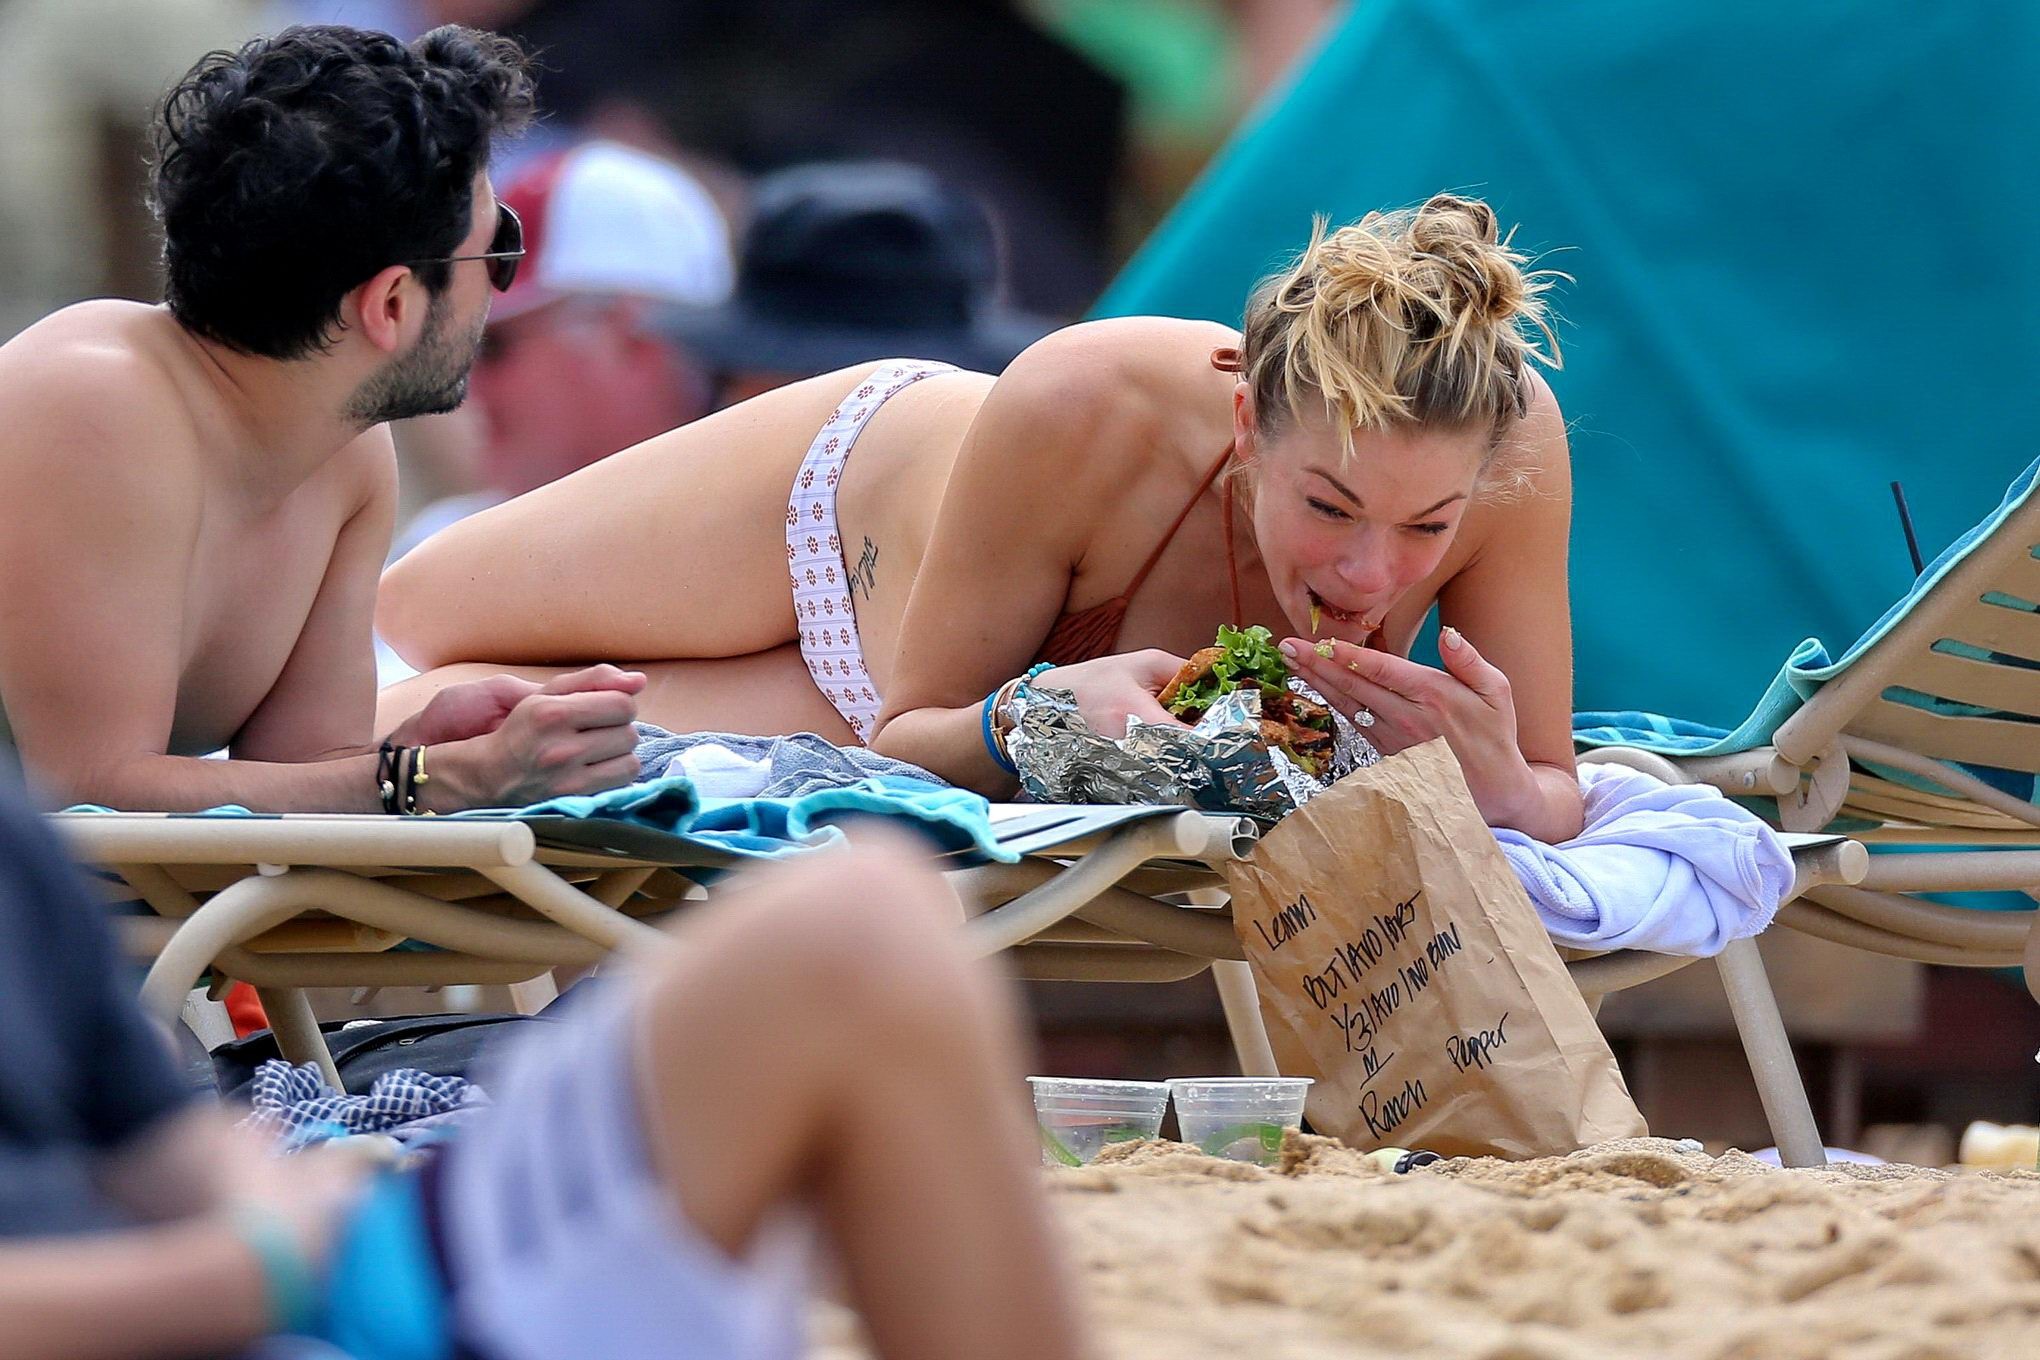 Leann rimes en bikini bronzant sur une plage hawaïenne.
 #75203300